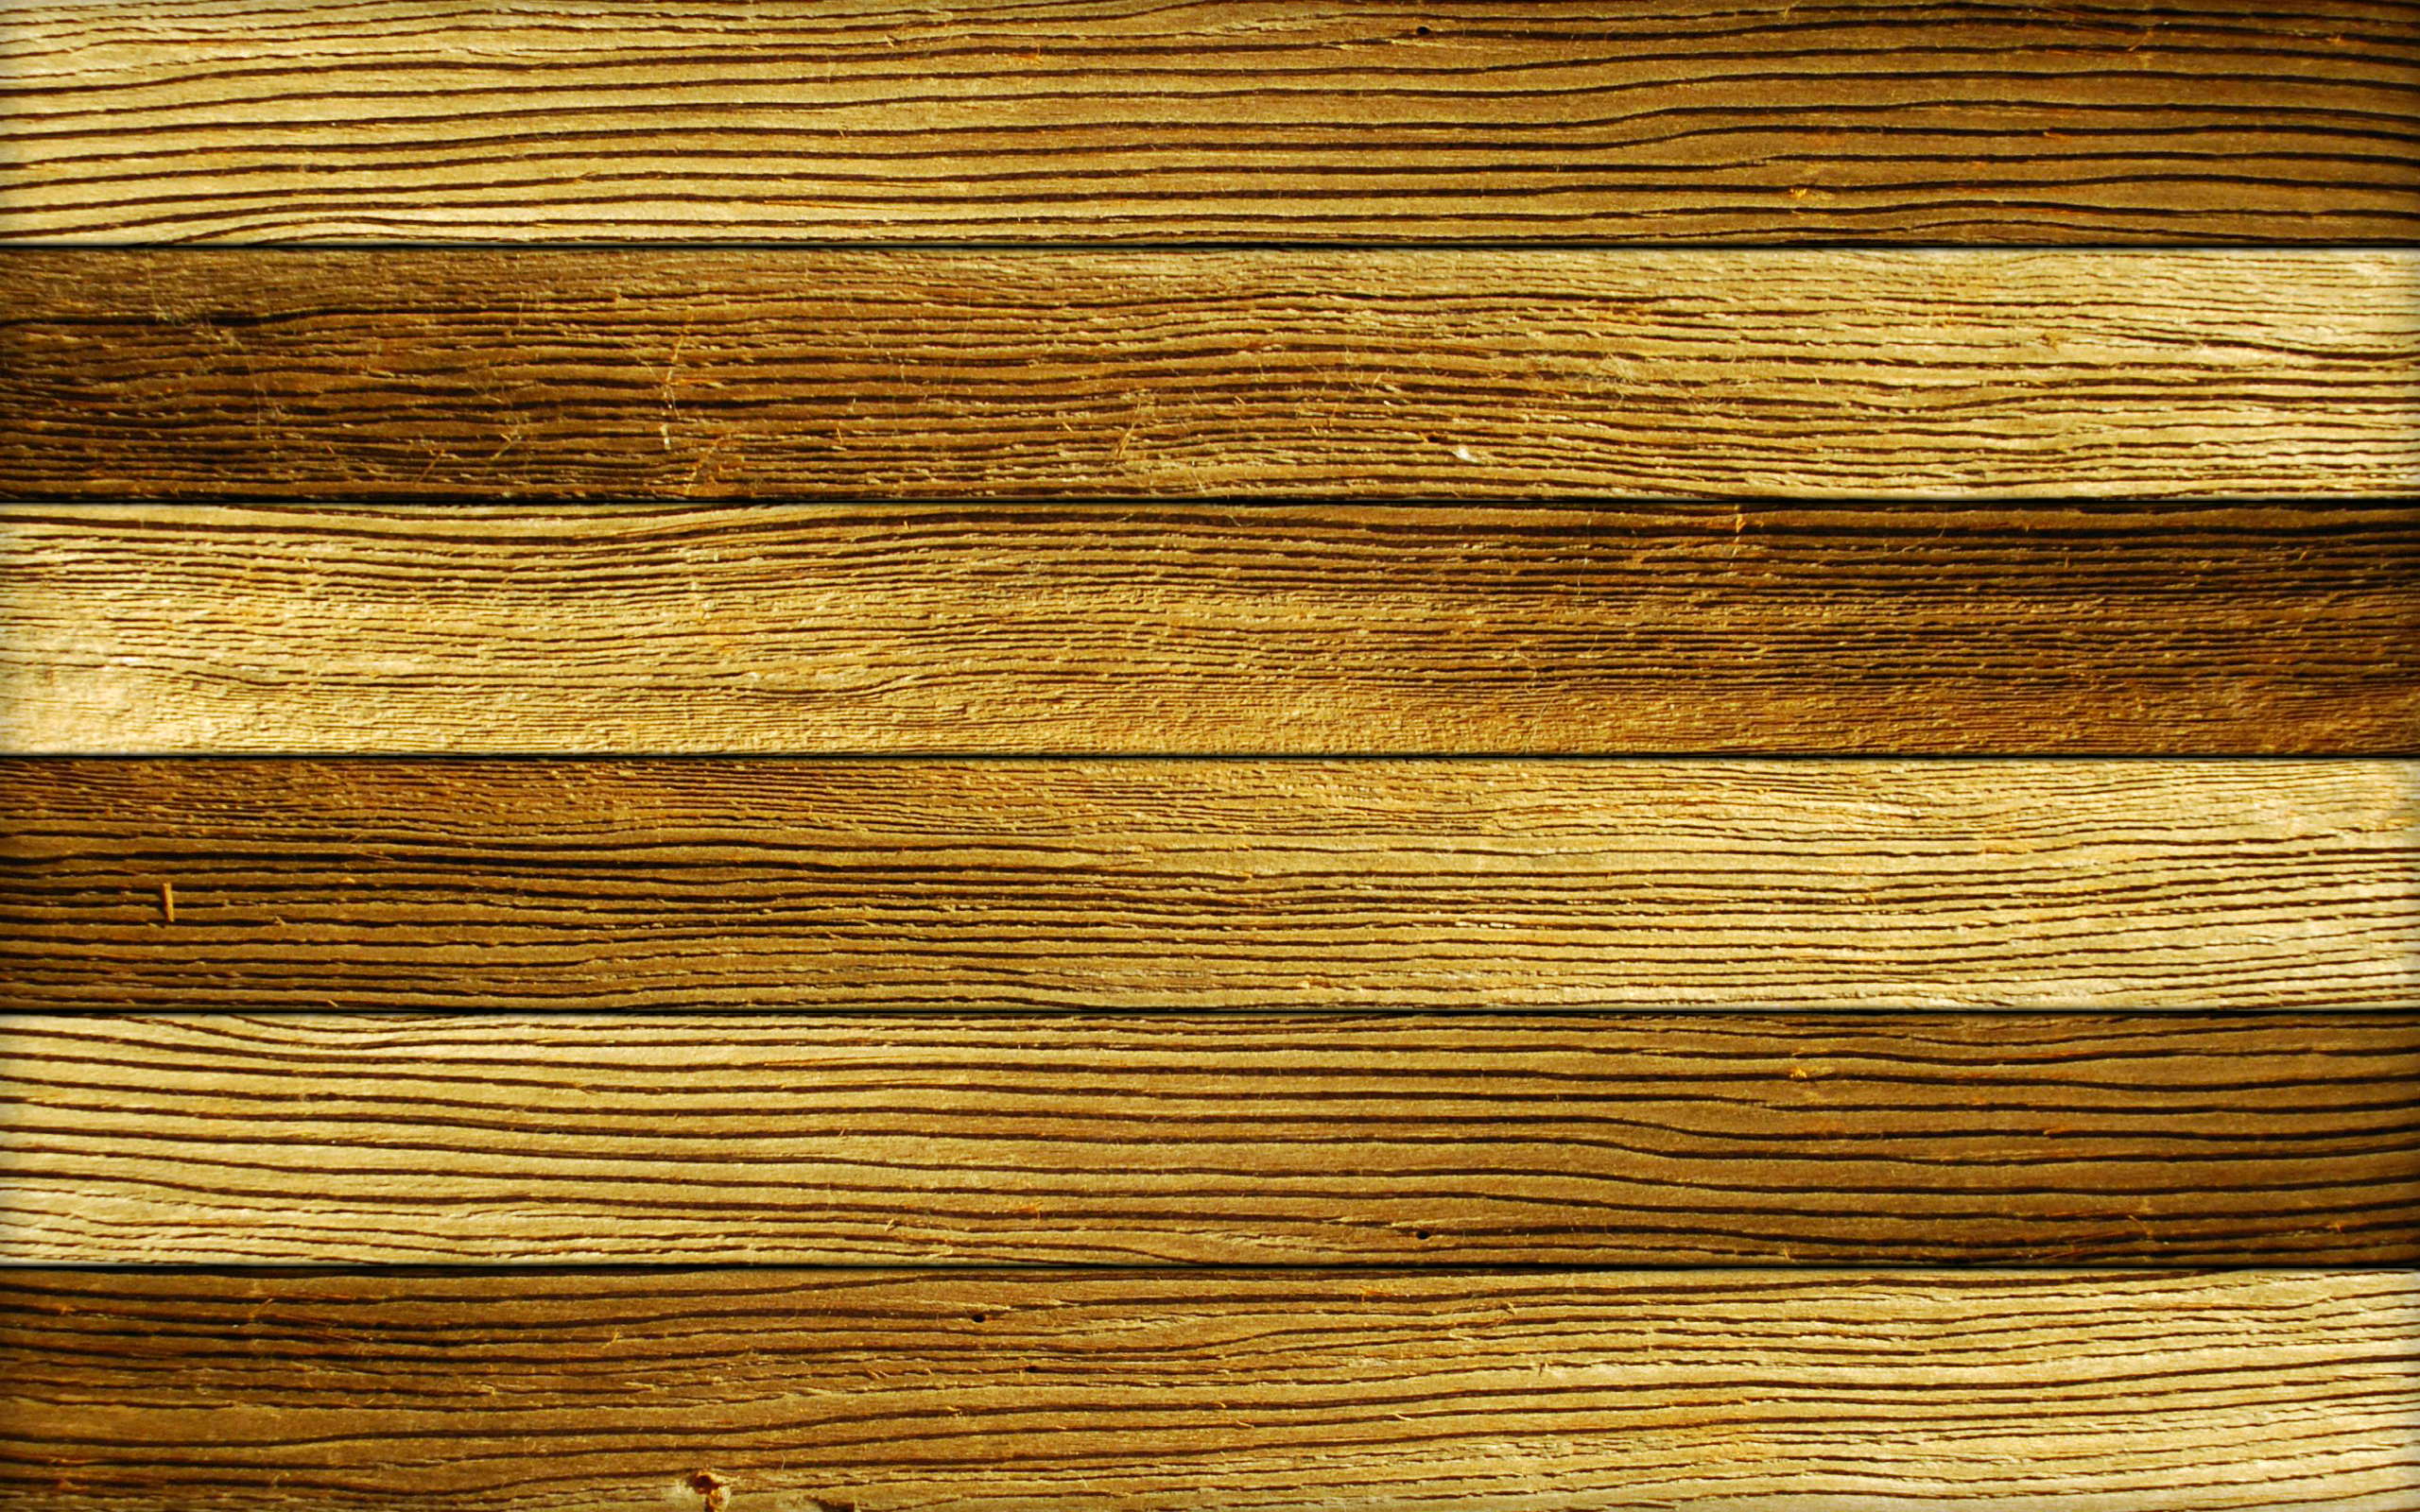 Wood Grain Desktop Background Image Amp Pictures Becuo